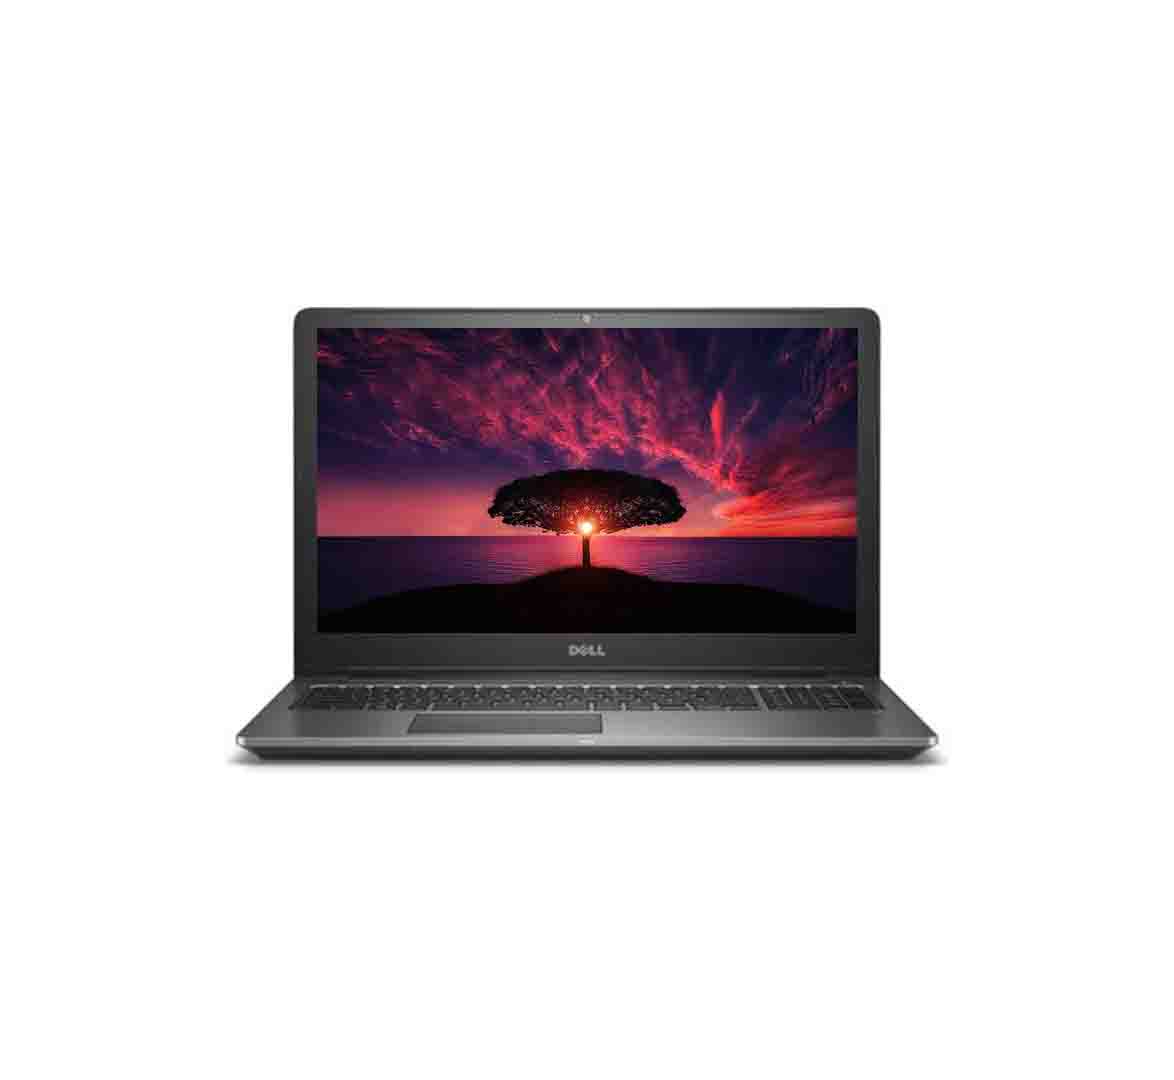 Dell Vostro 5568 Business Laptop, Intel Core i5-7th Generation CPU, 8GB RAM, 256GB SSD , 15.4 inch Display, Windows 10 Pro, Refurbished Laptop